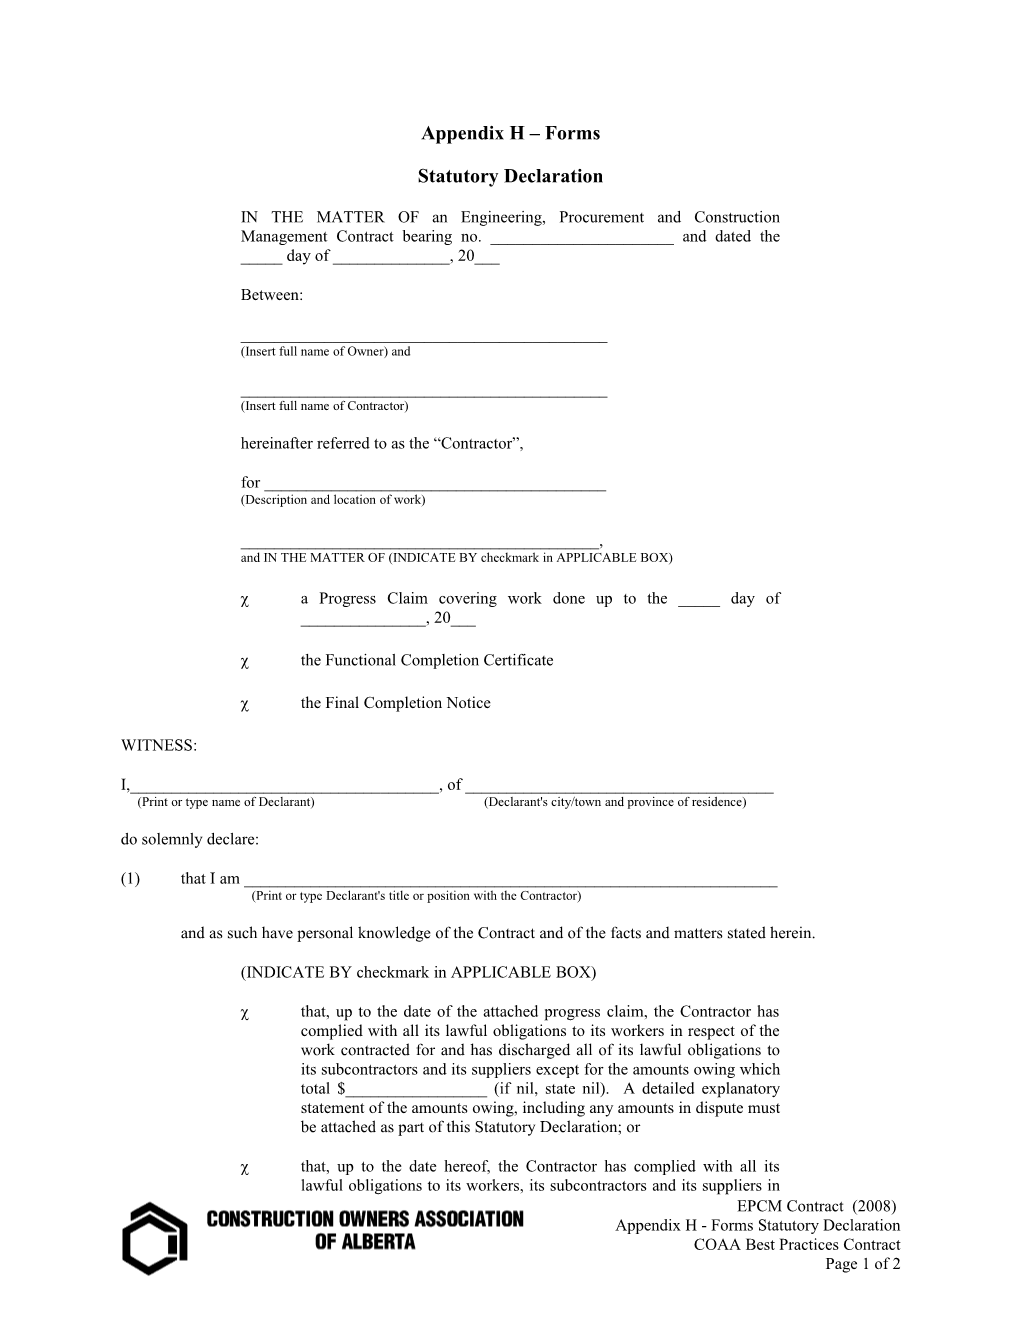 COAA EPC Appendix G Forms - Statutory Declaration (769779;3)